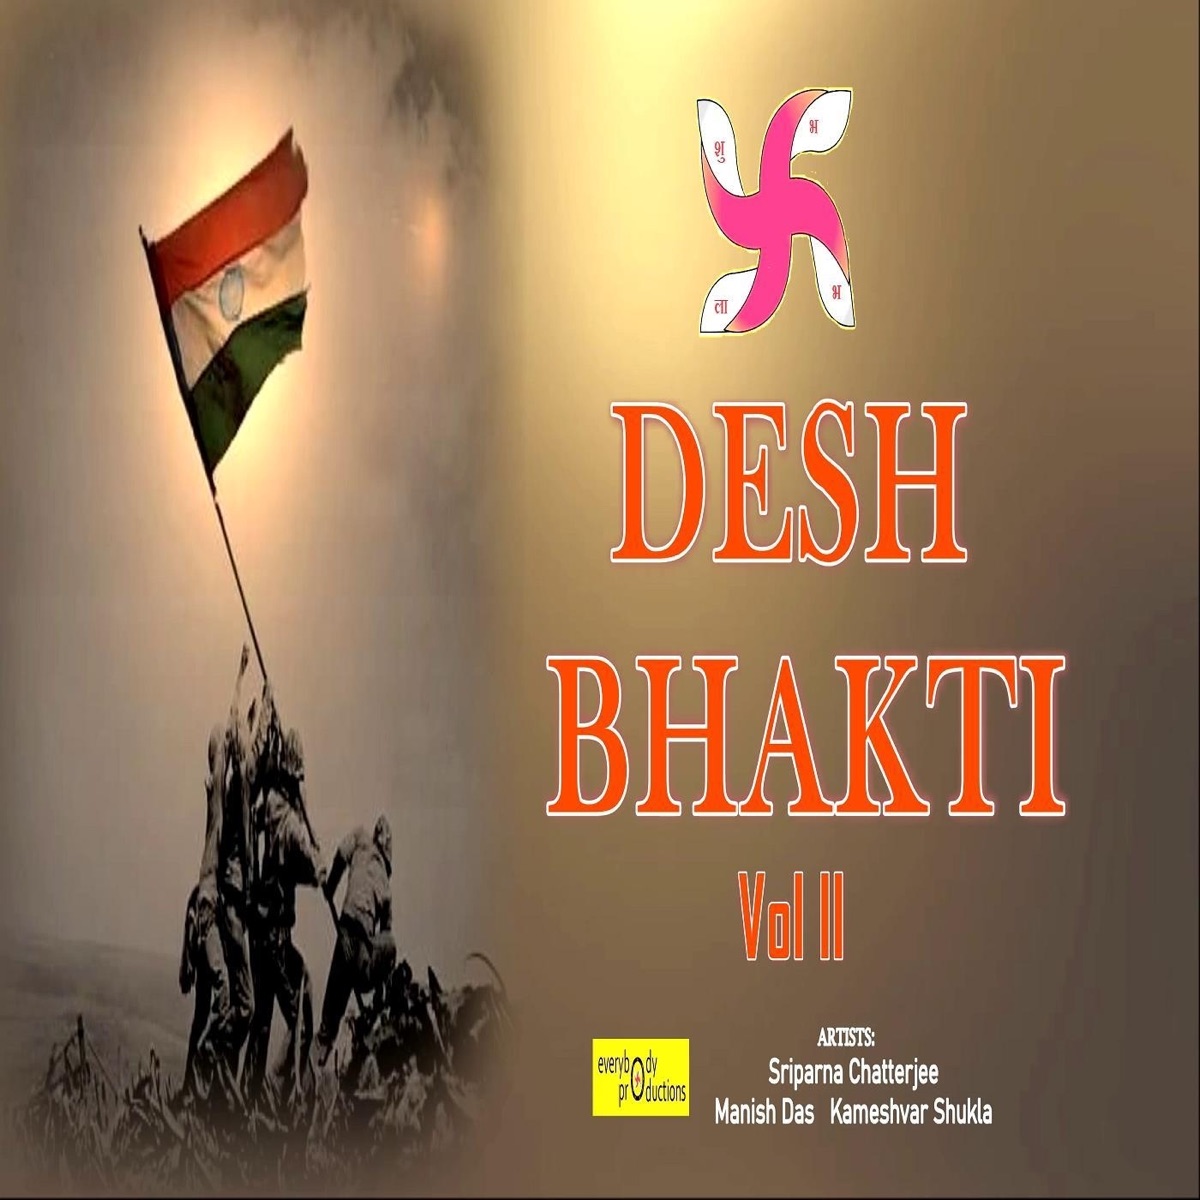 Republic Day Desh Bhakti Mp3 songs Archives - Hindu Parv